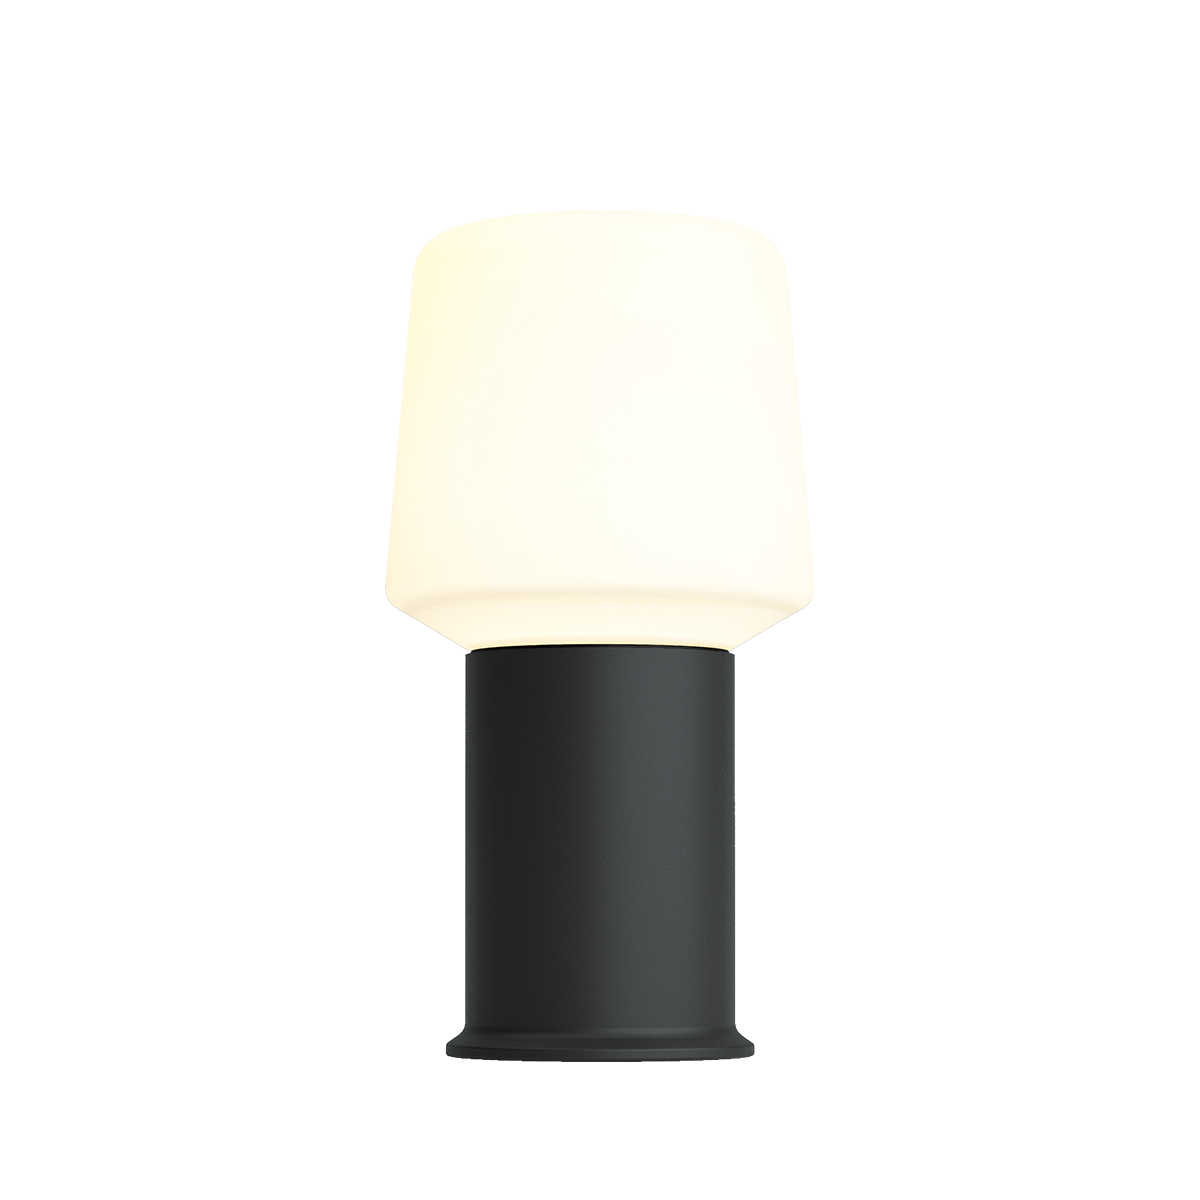 variant_600222% | Ambience - Lamp Intelligent + London base - Black 8 | SACKit